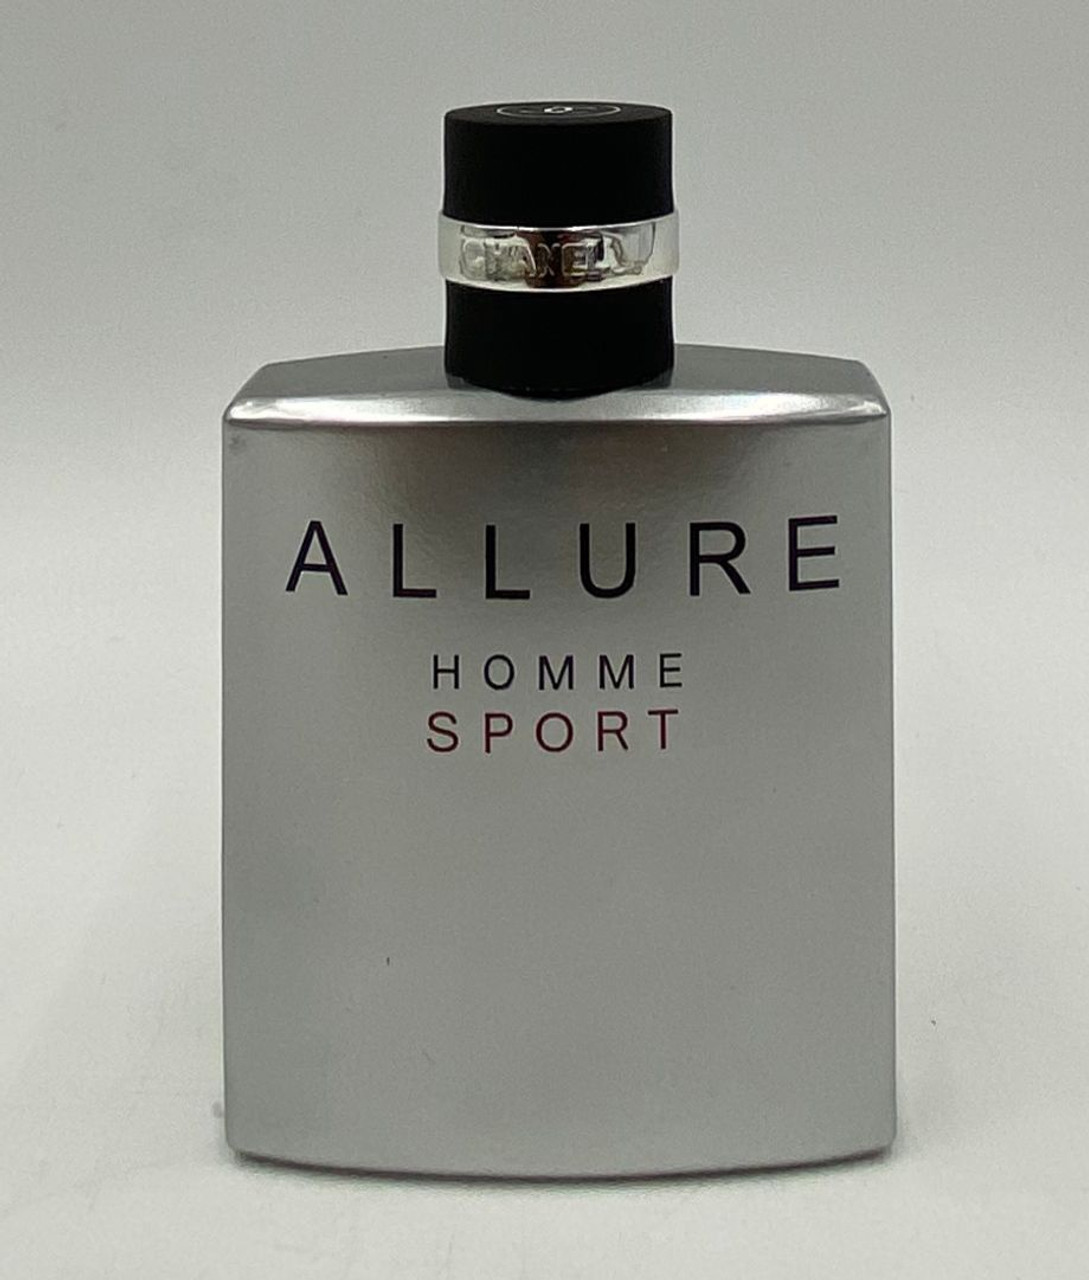  Chanel Allure Homme Sport Eau De Toilette Travel Spray Refills  (3 Refills) 3x20ml : Beauty & Personal Care